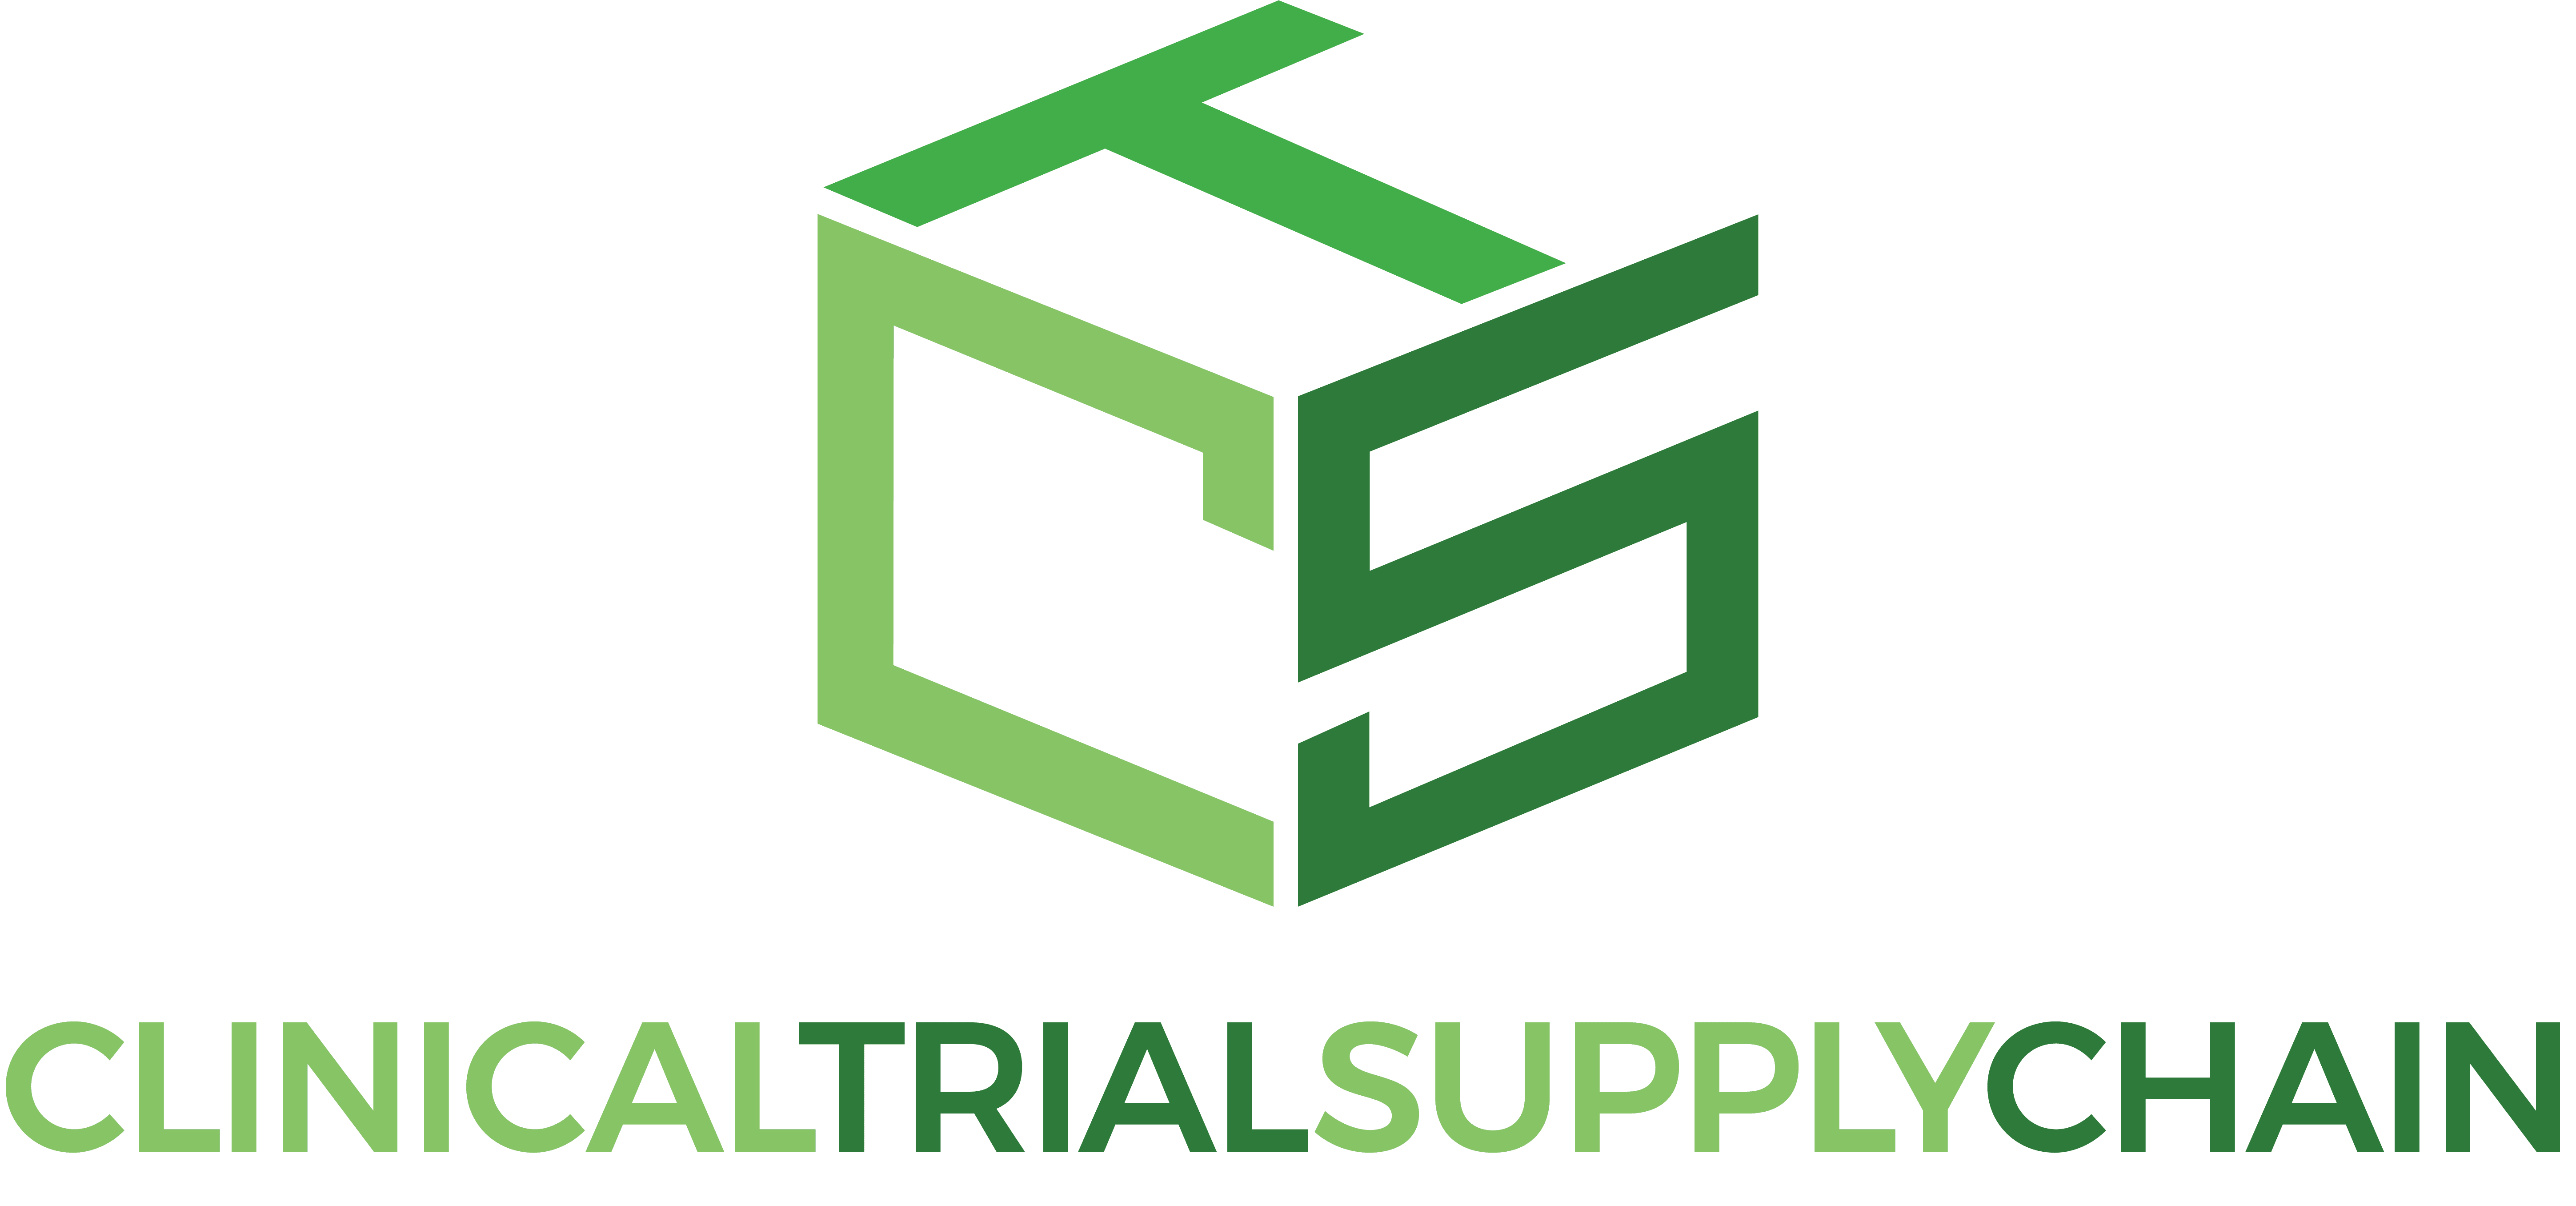 Clinical Trial Supply Chain Zurich